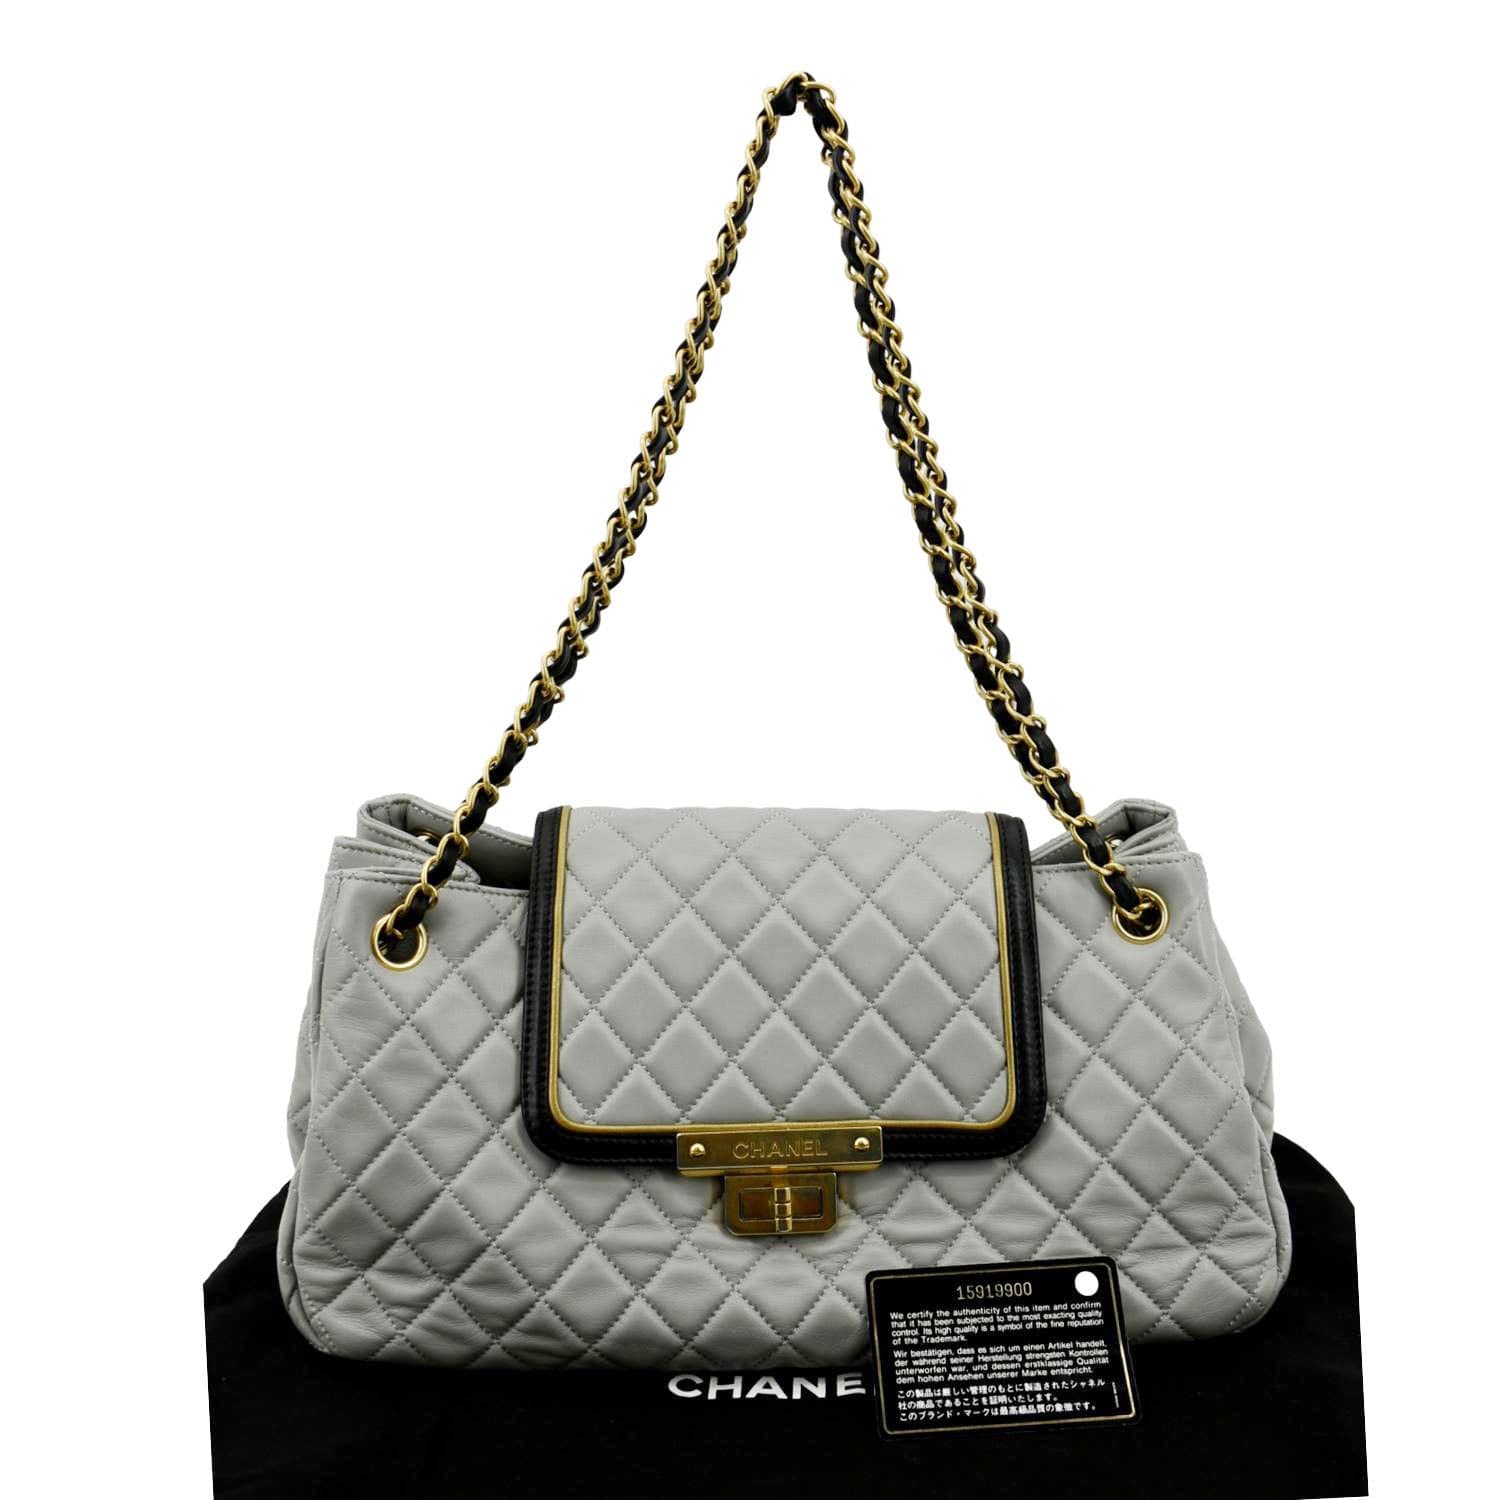 Discontinued bag #5: Chanel East West Flap, Bragmybag